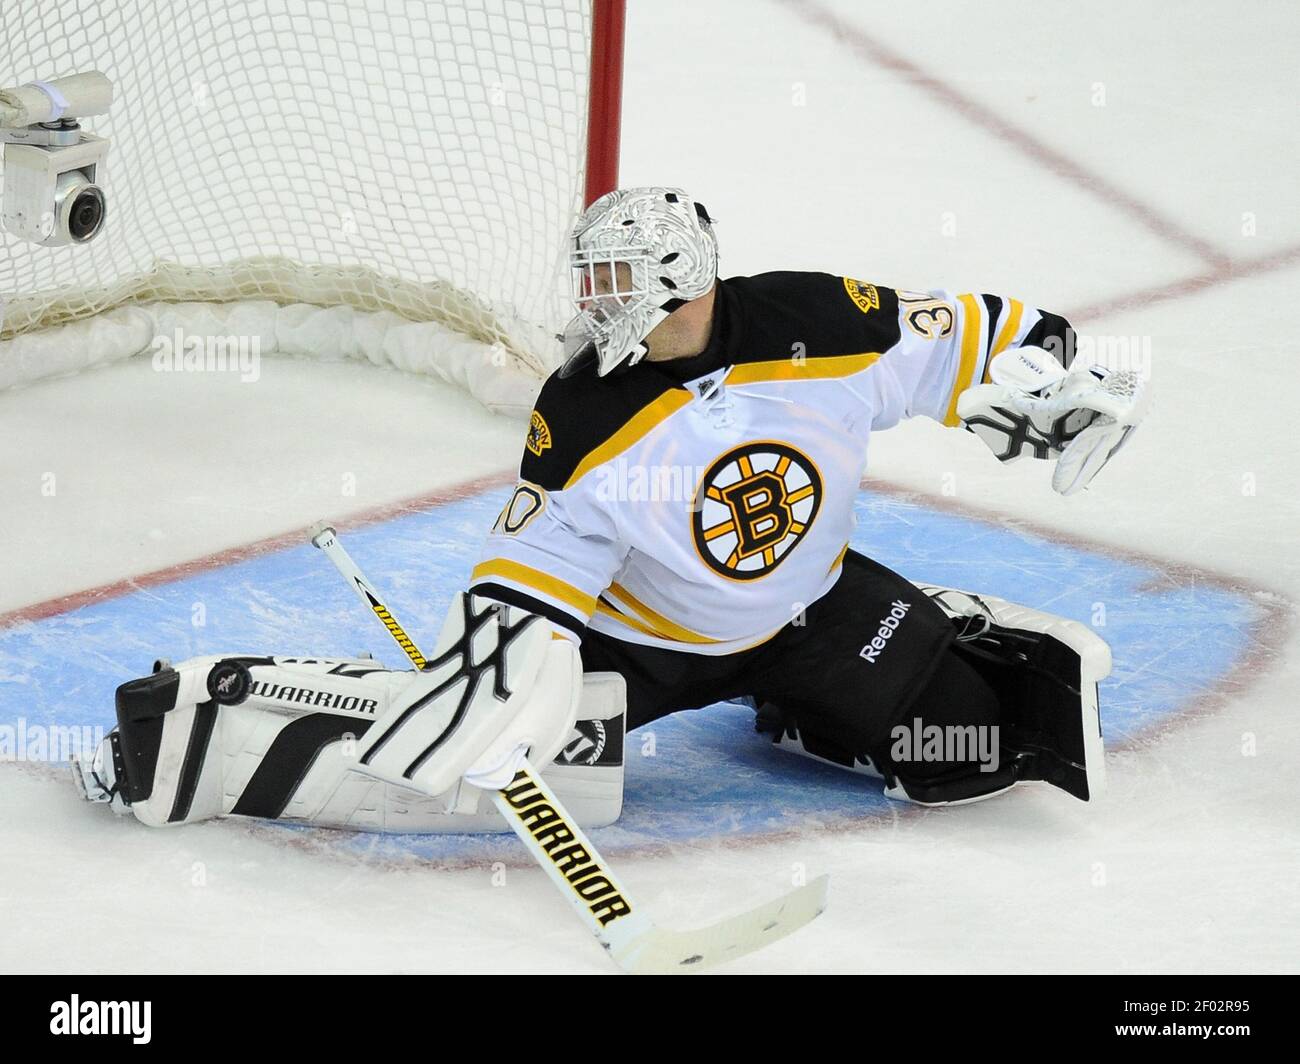 Boston Bruins Goalie Tim Thomas. Editorial Stock Image - Image of